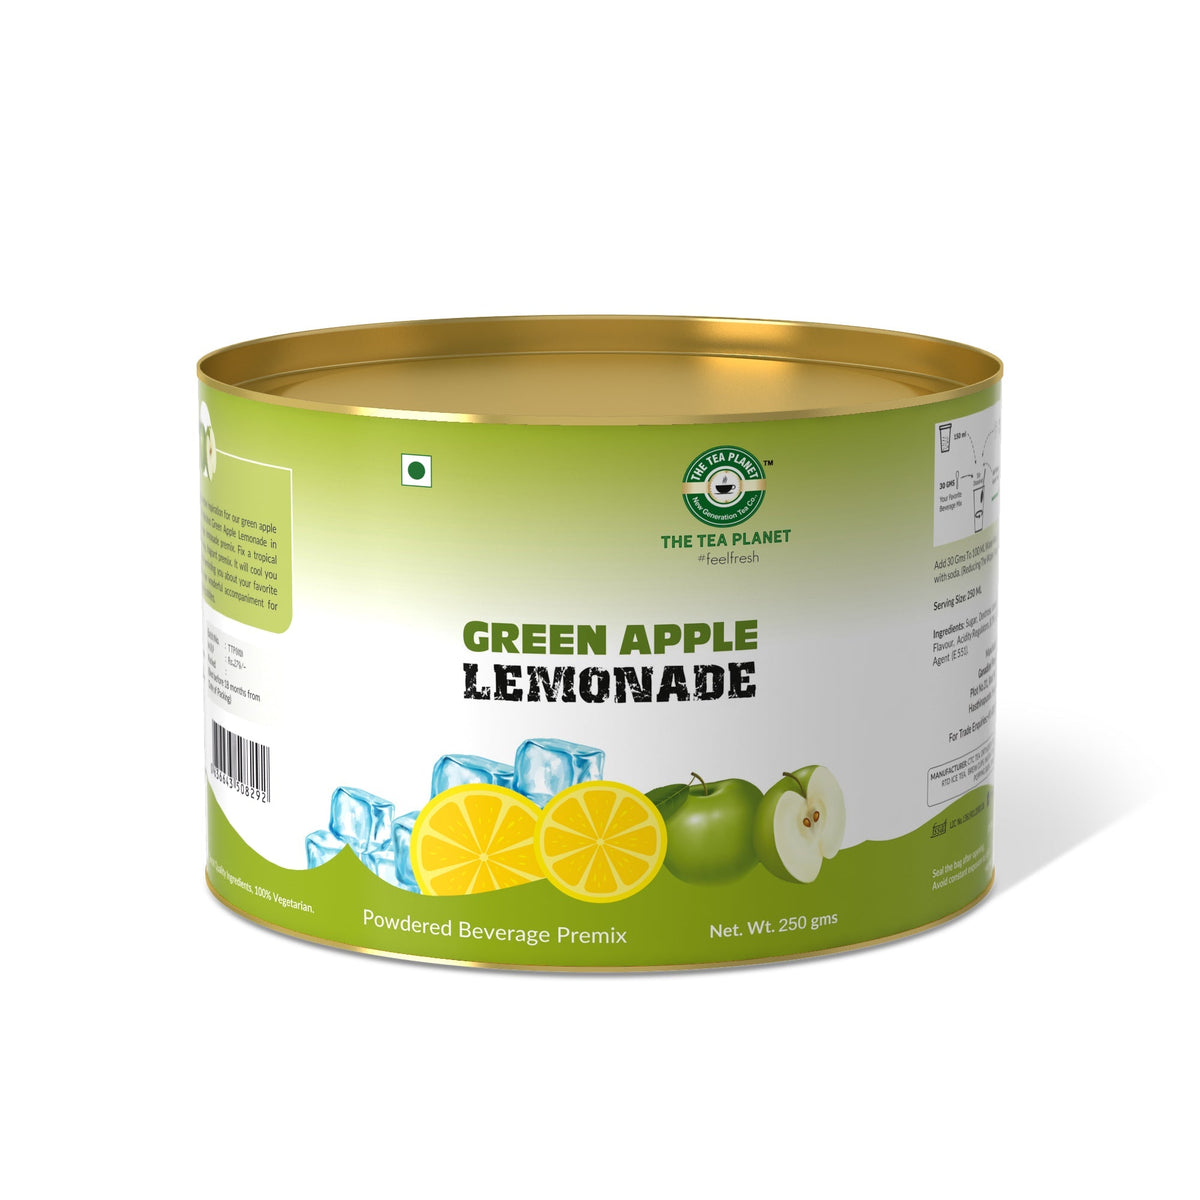 Green Apple Lemonade Premix - 800 gms